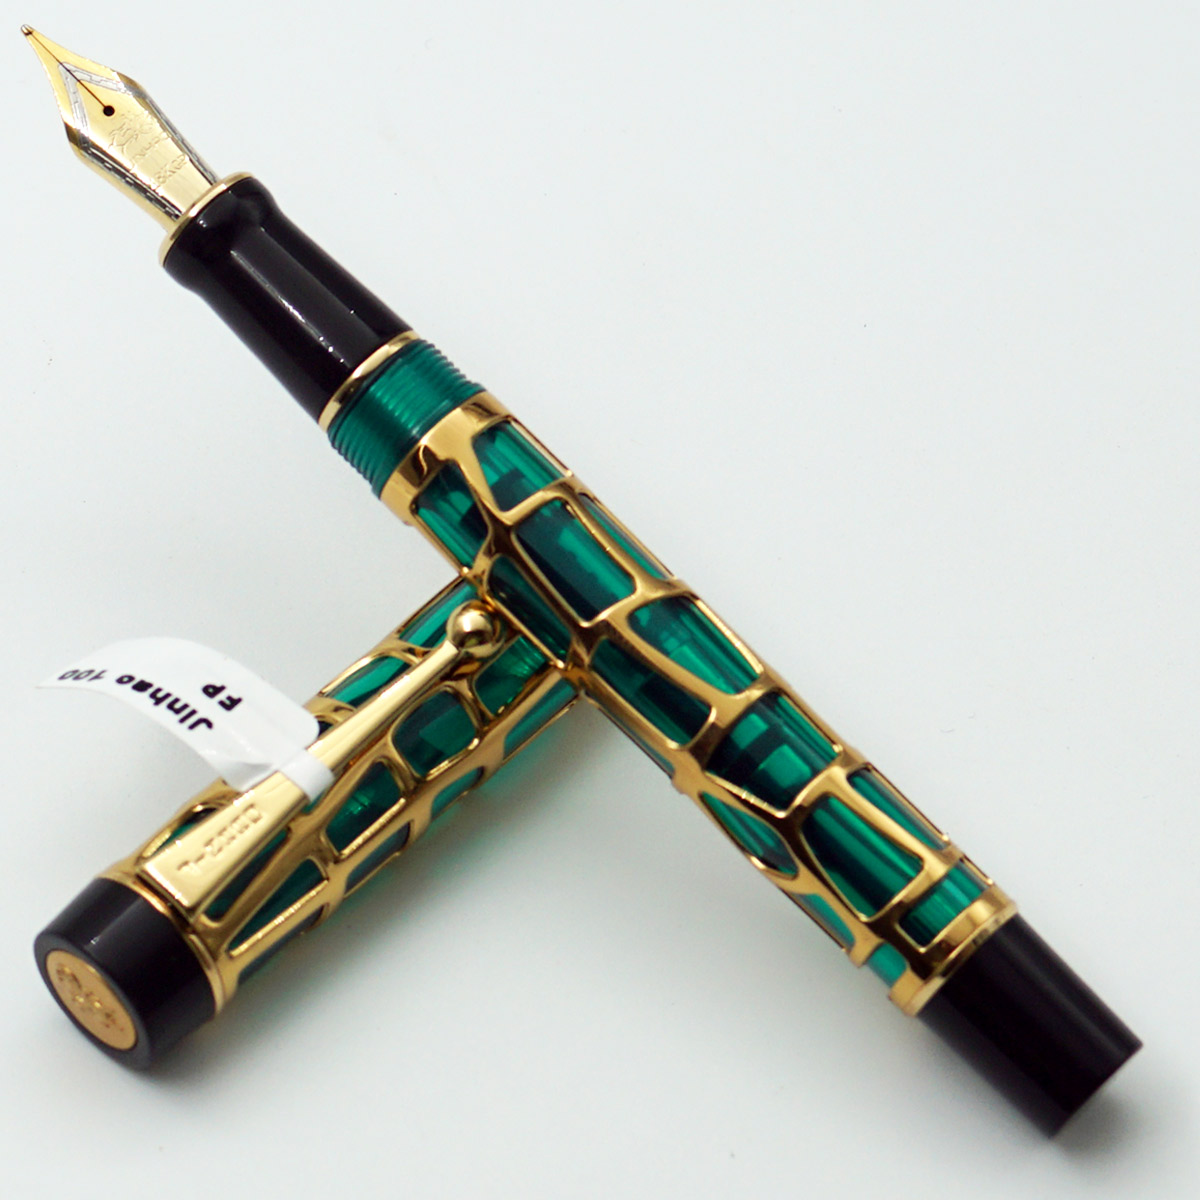 Jinhao 100 Green With Golden Color Resin Grid Design Body with Golden Clip Medium Nib Converter Type Fountain Pen SKU 24537